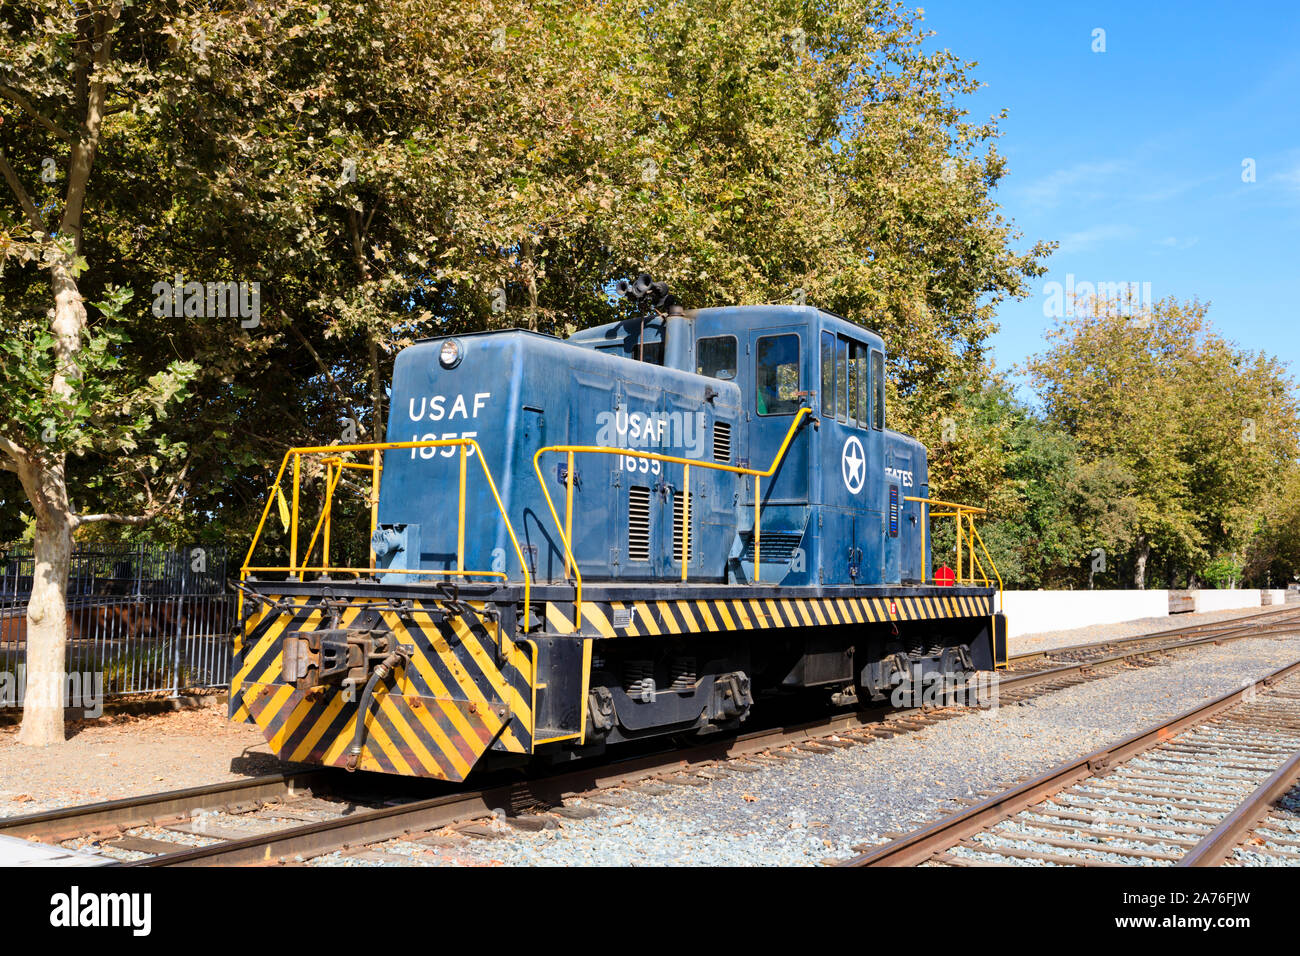 Utility locomotive ex USAF 1655 at the California state Railroad Museum, Sacramento, State capital of California, United States of America. Stock Photo